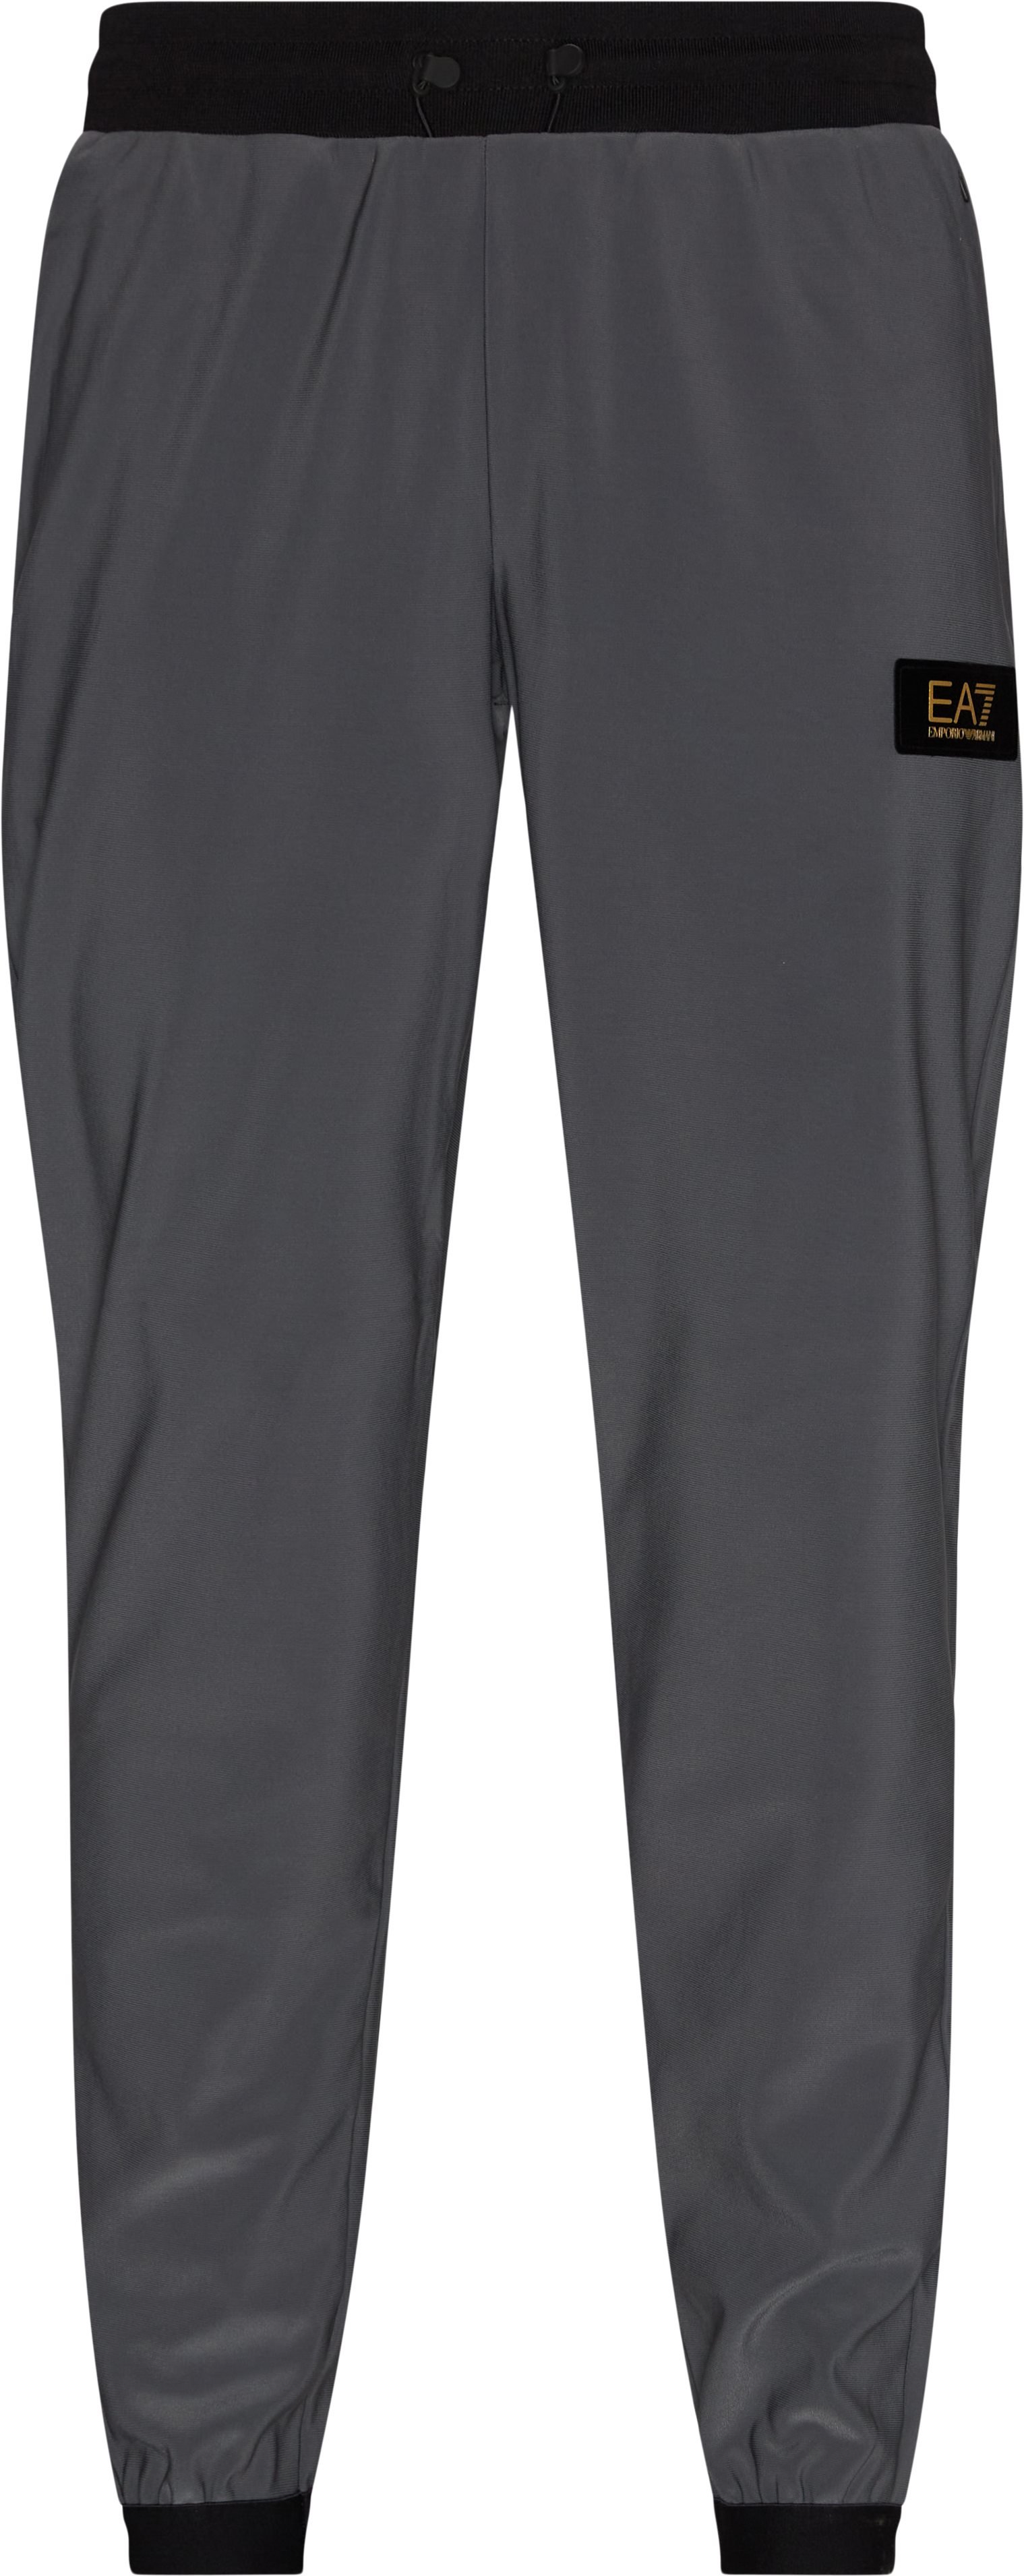 PJCCZ-6KPP80 Bukser - Trousers - Regular fit - Grey